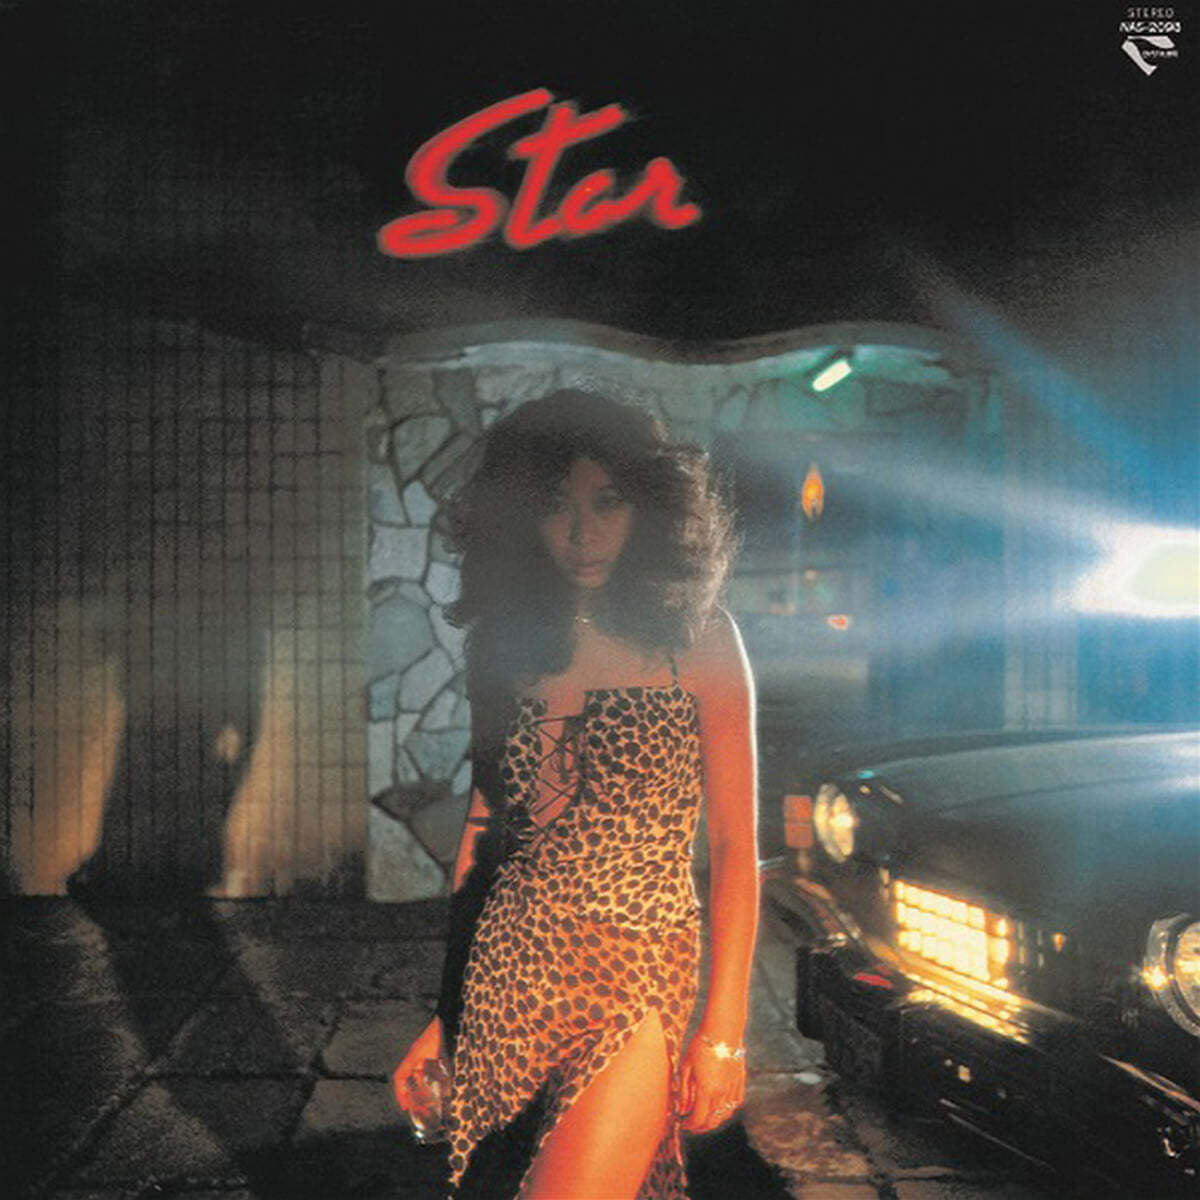 Ida Rie / 42nd Street (이다 리에 / 42nd 스트리트) - Star [LP]